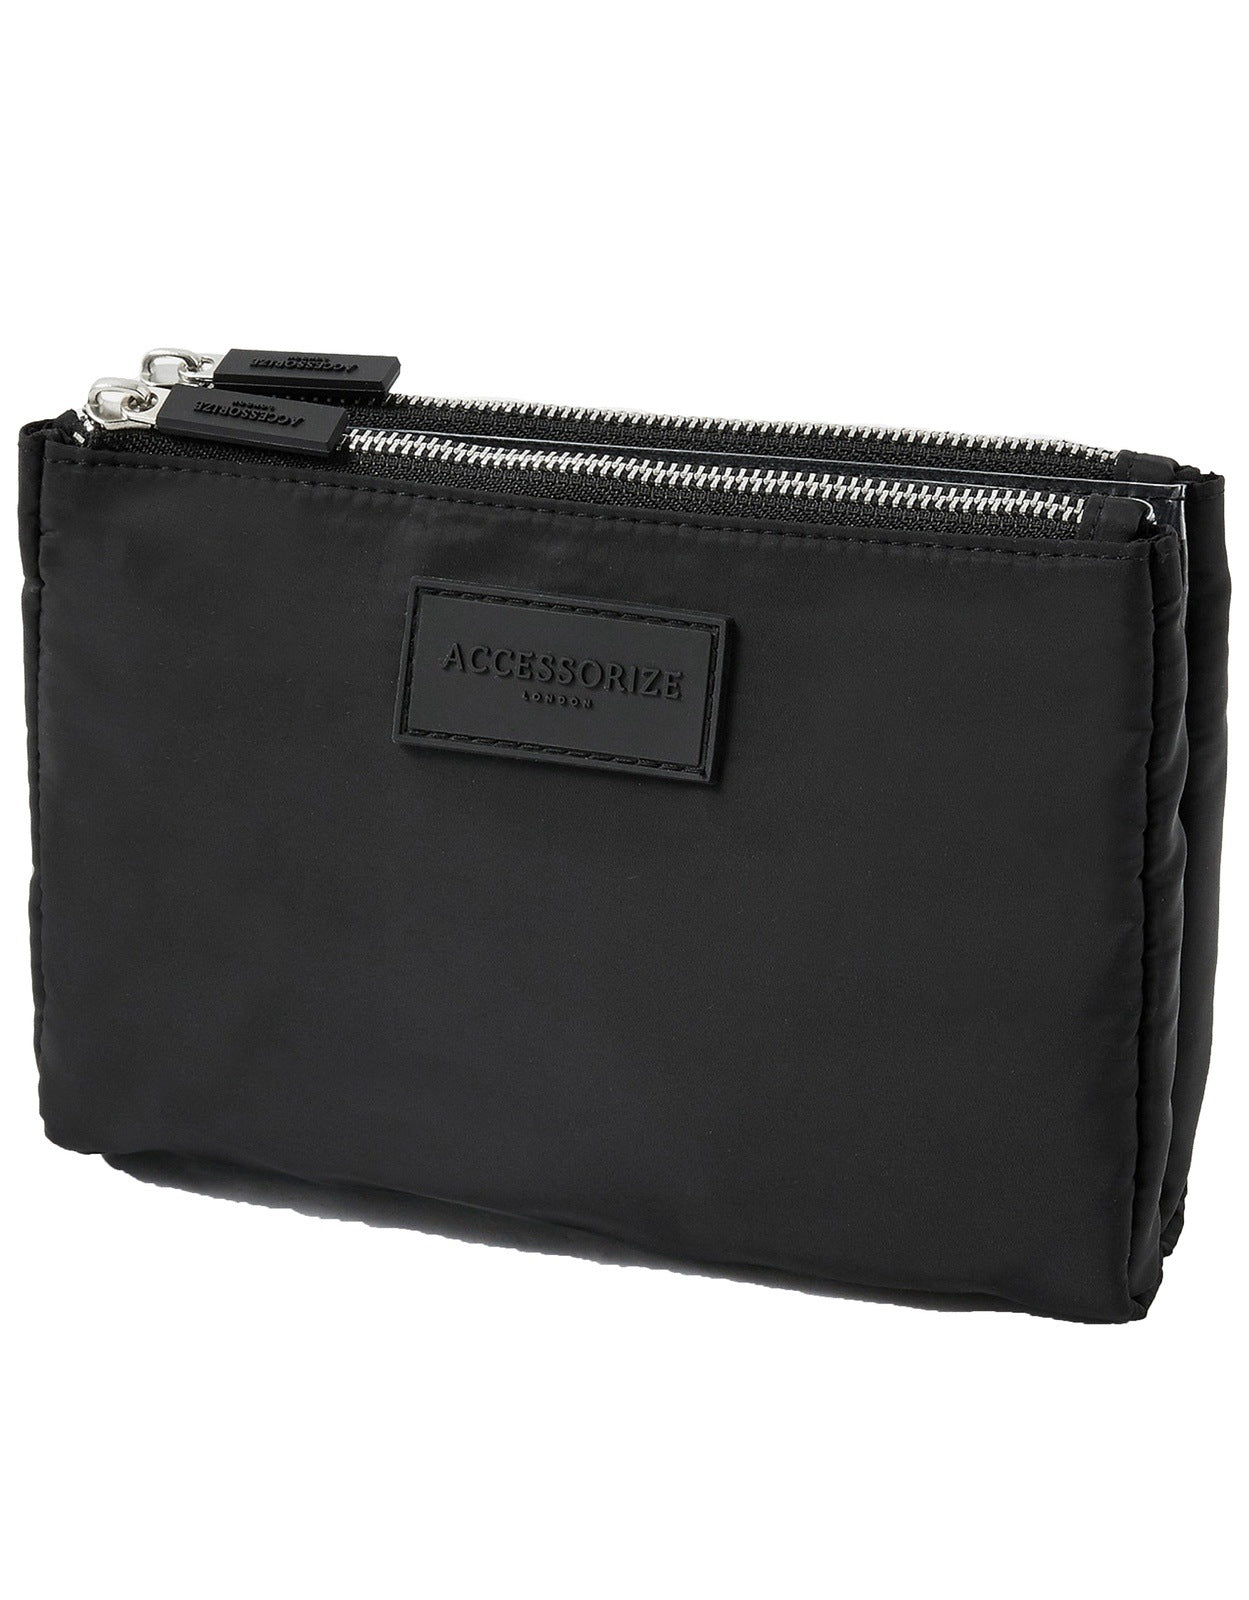 nuoku RFID Wallet Women Travel Zip Wristlet Purse Crossbody Clutch:  Handbags: Amazon.com